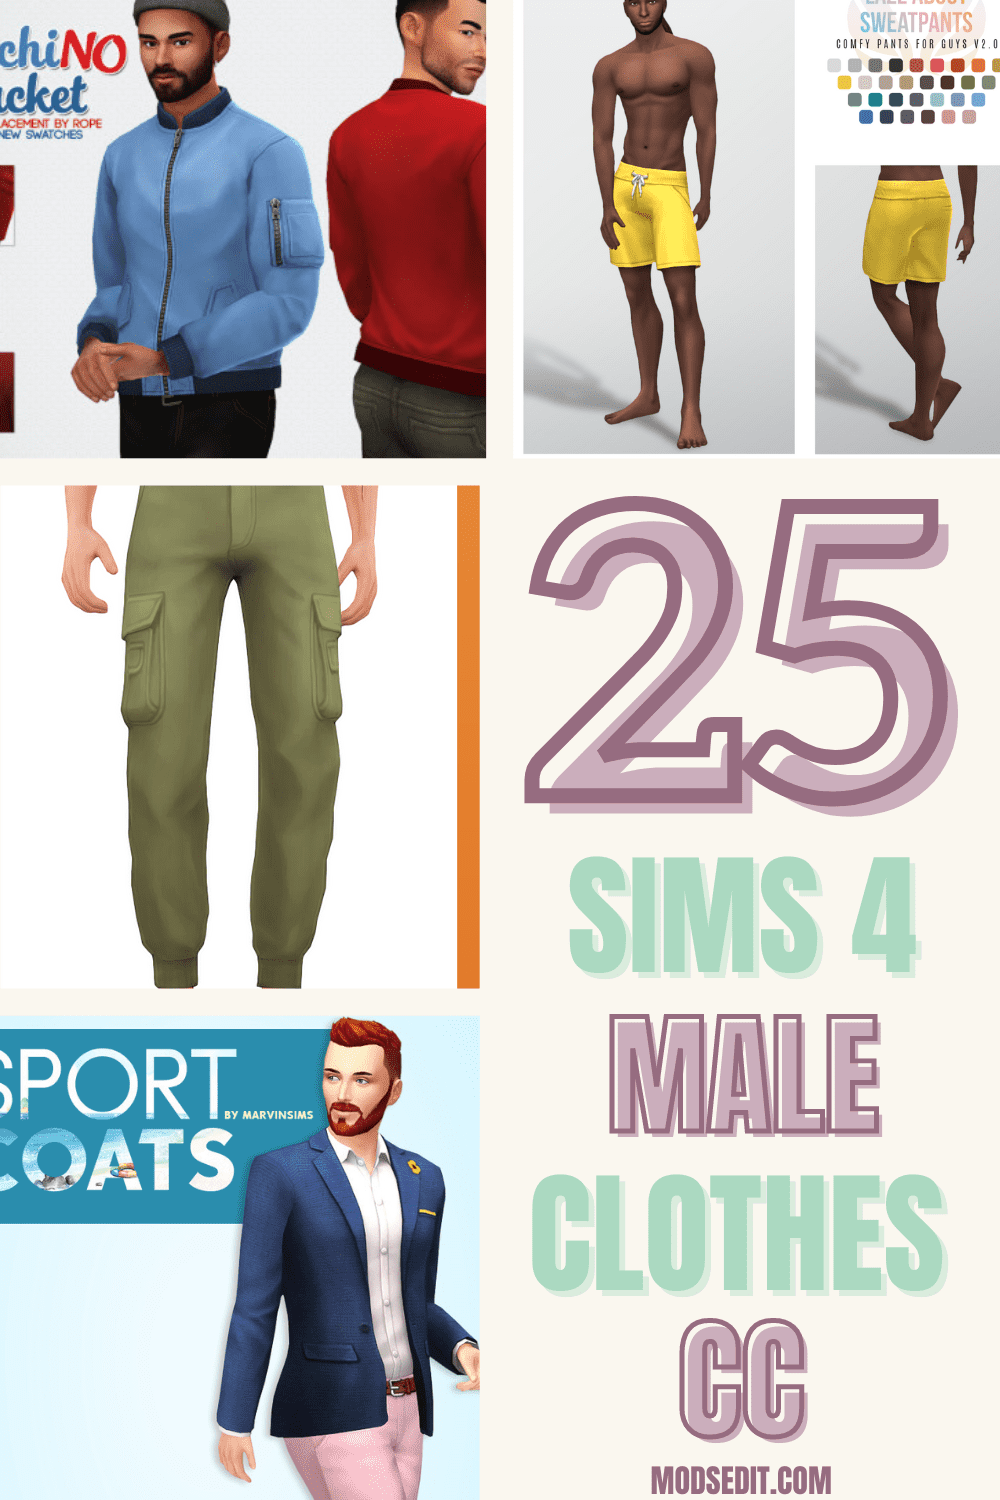 Sims 4 Male Clothes CC